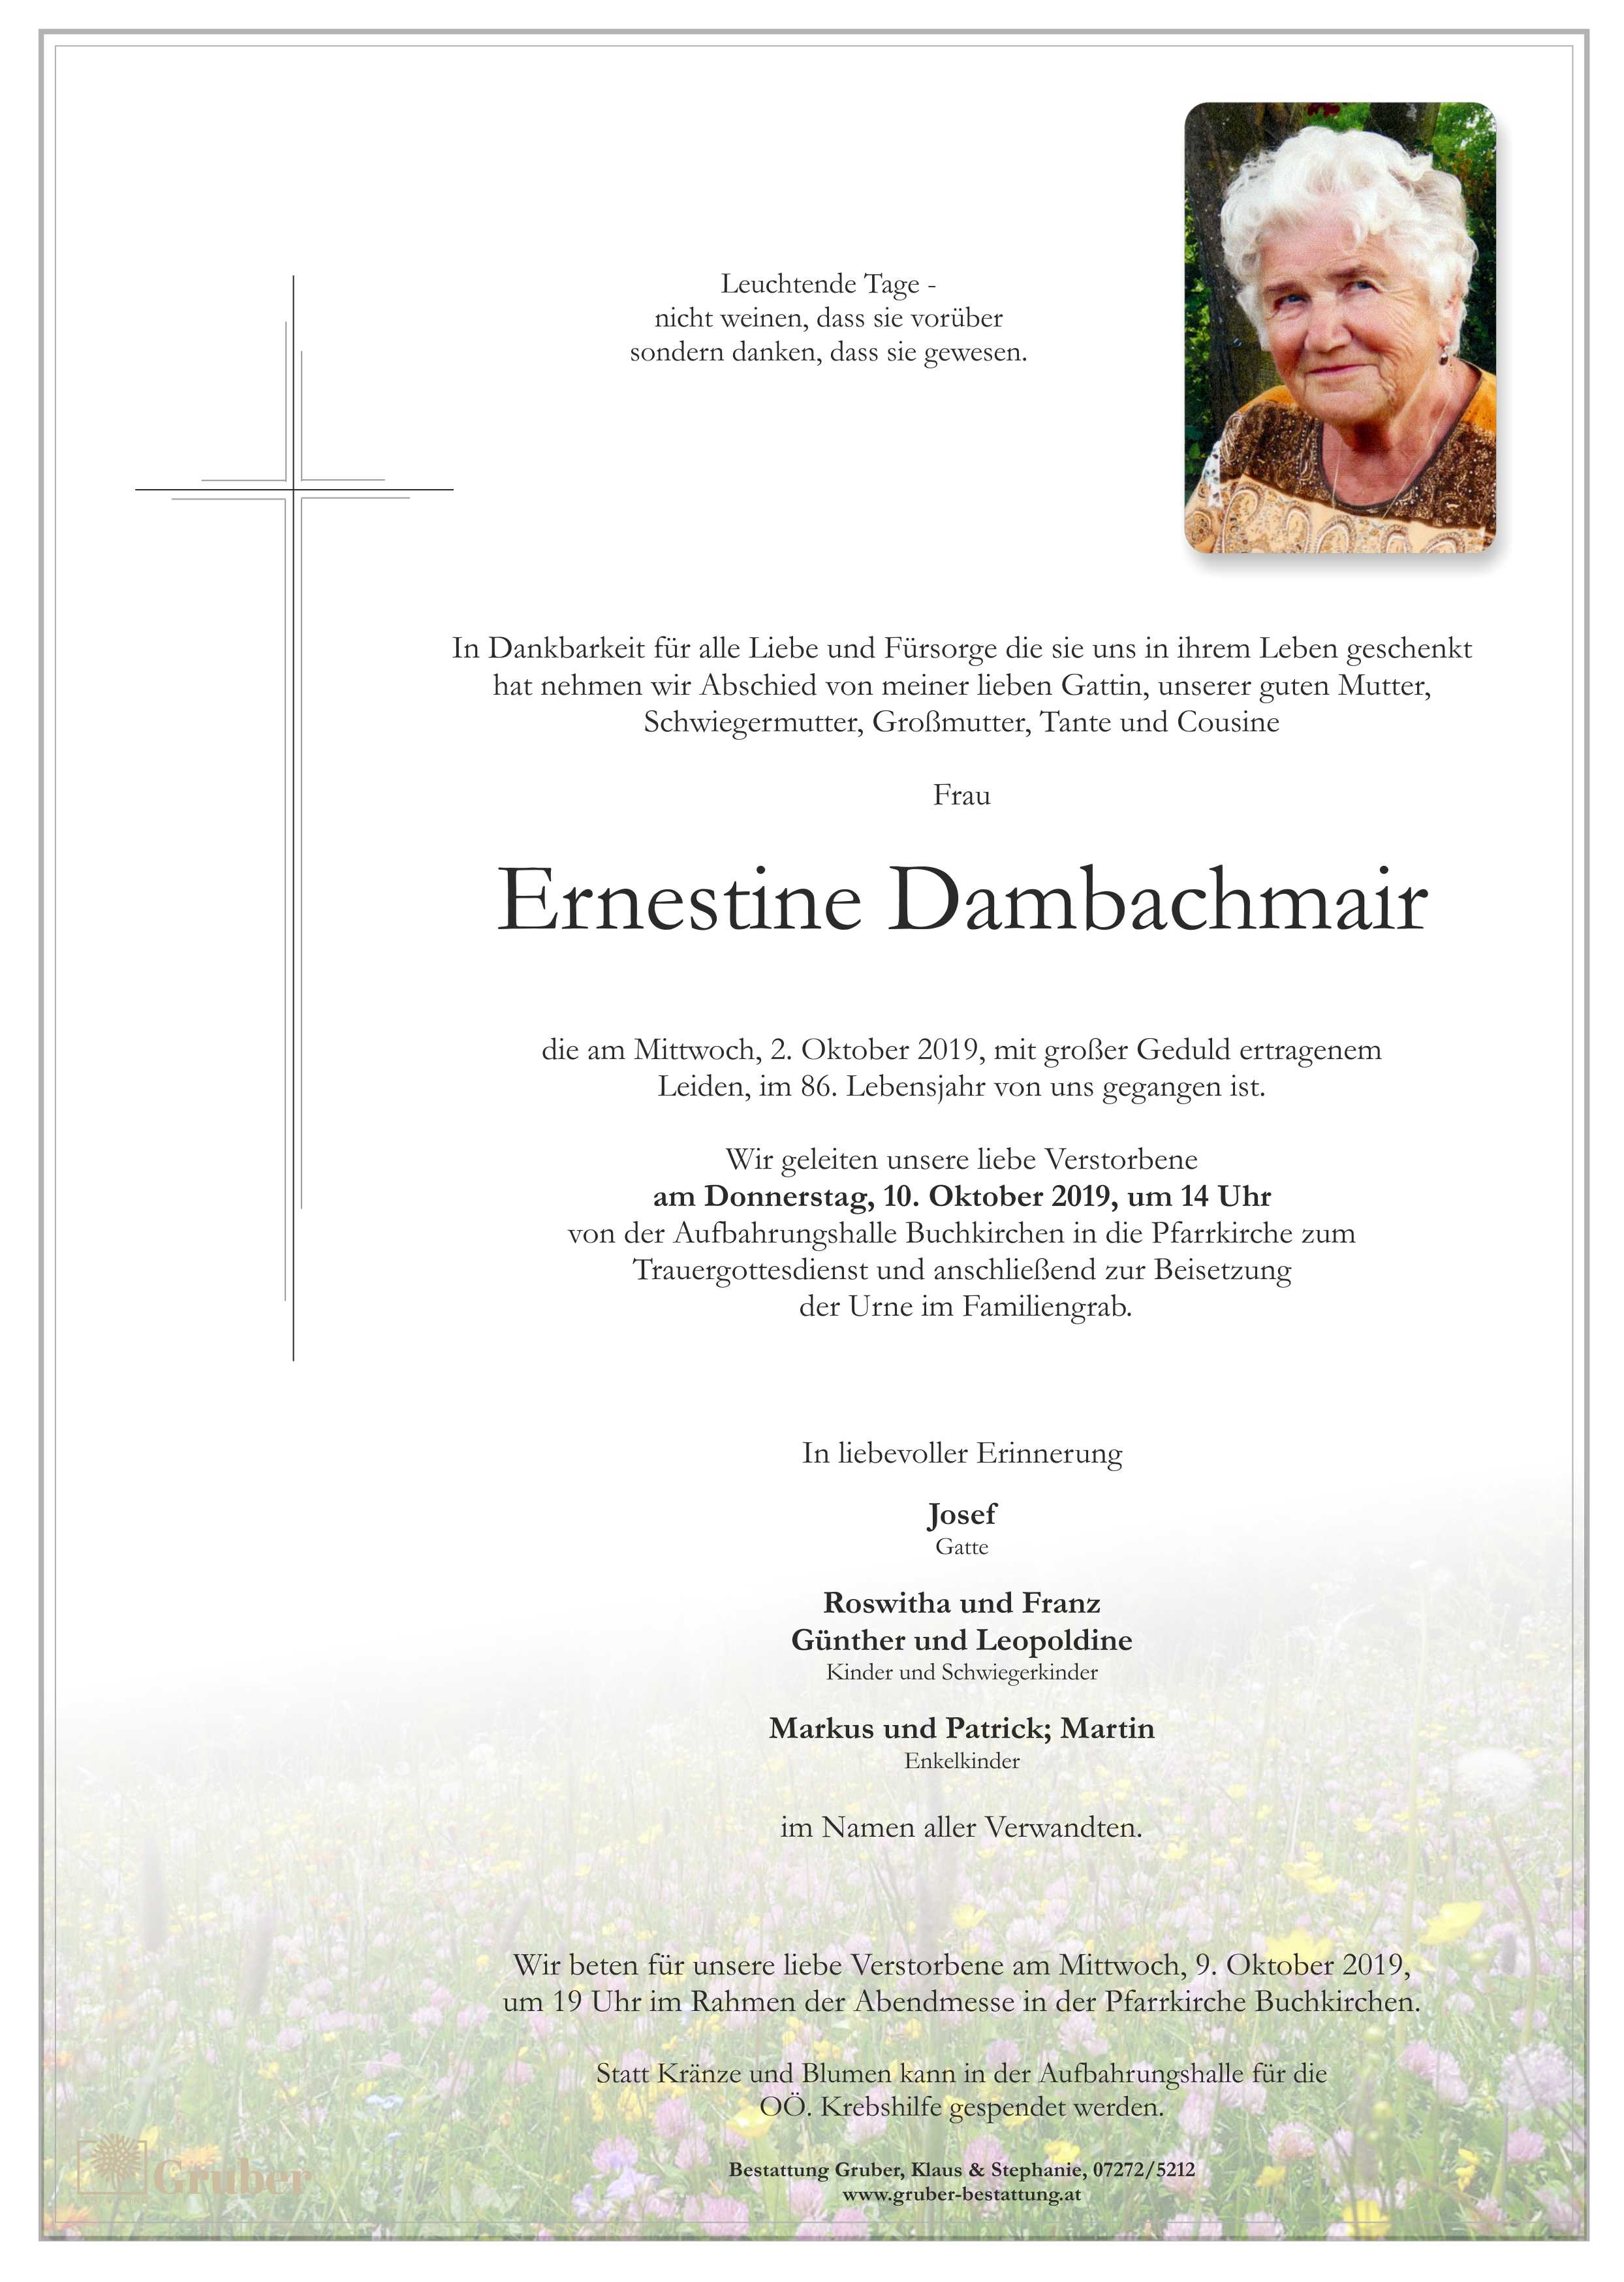 Ernestine Dambachmair (Buchkirchen)